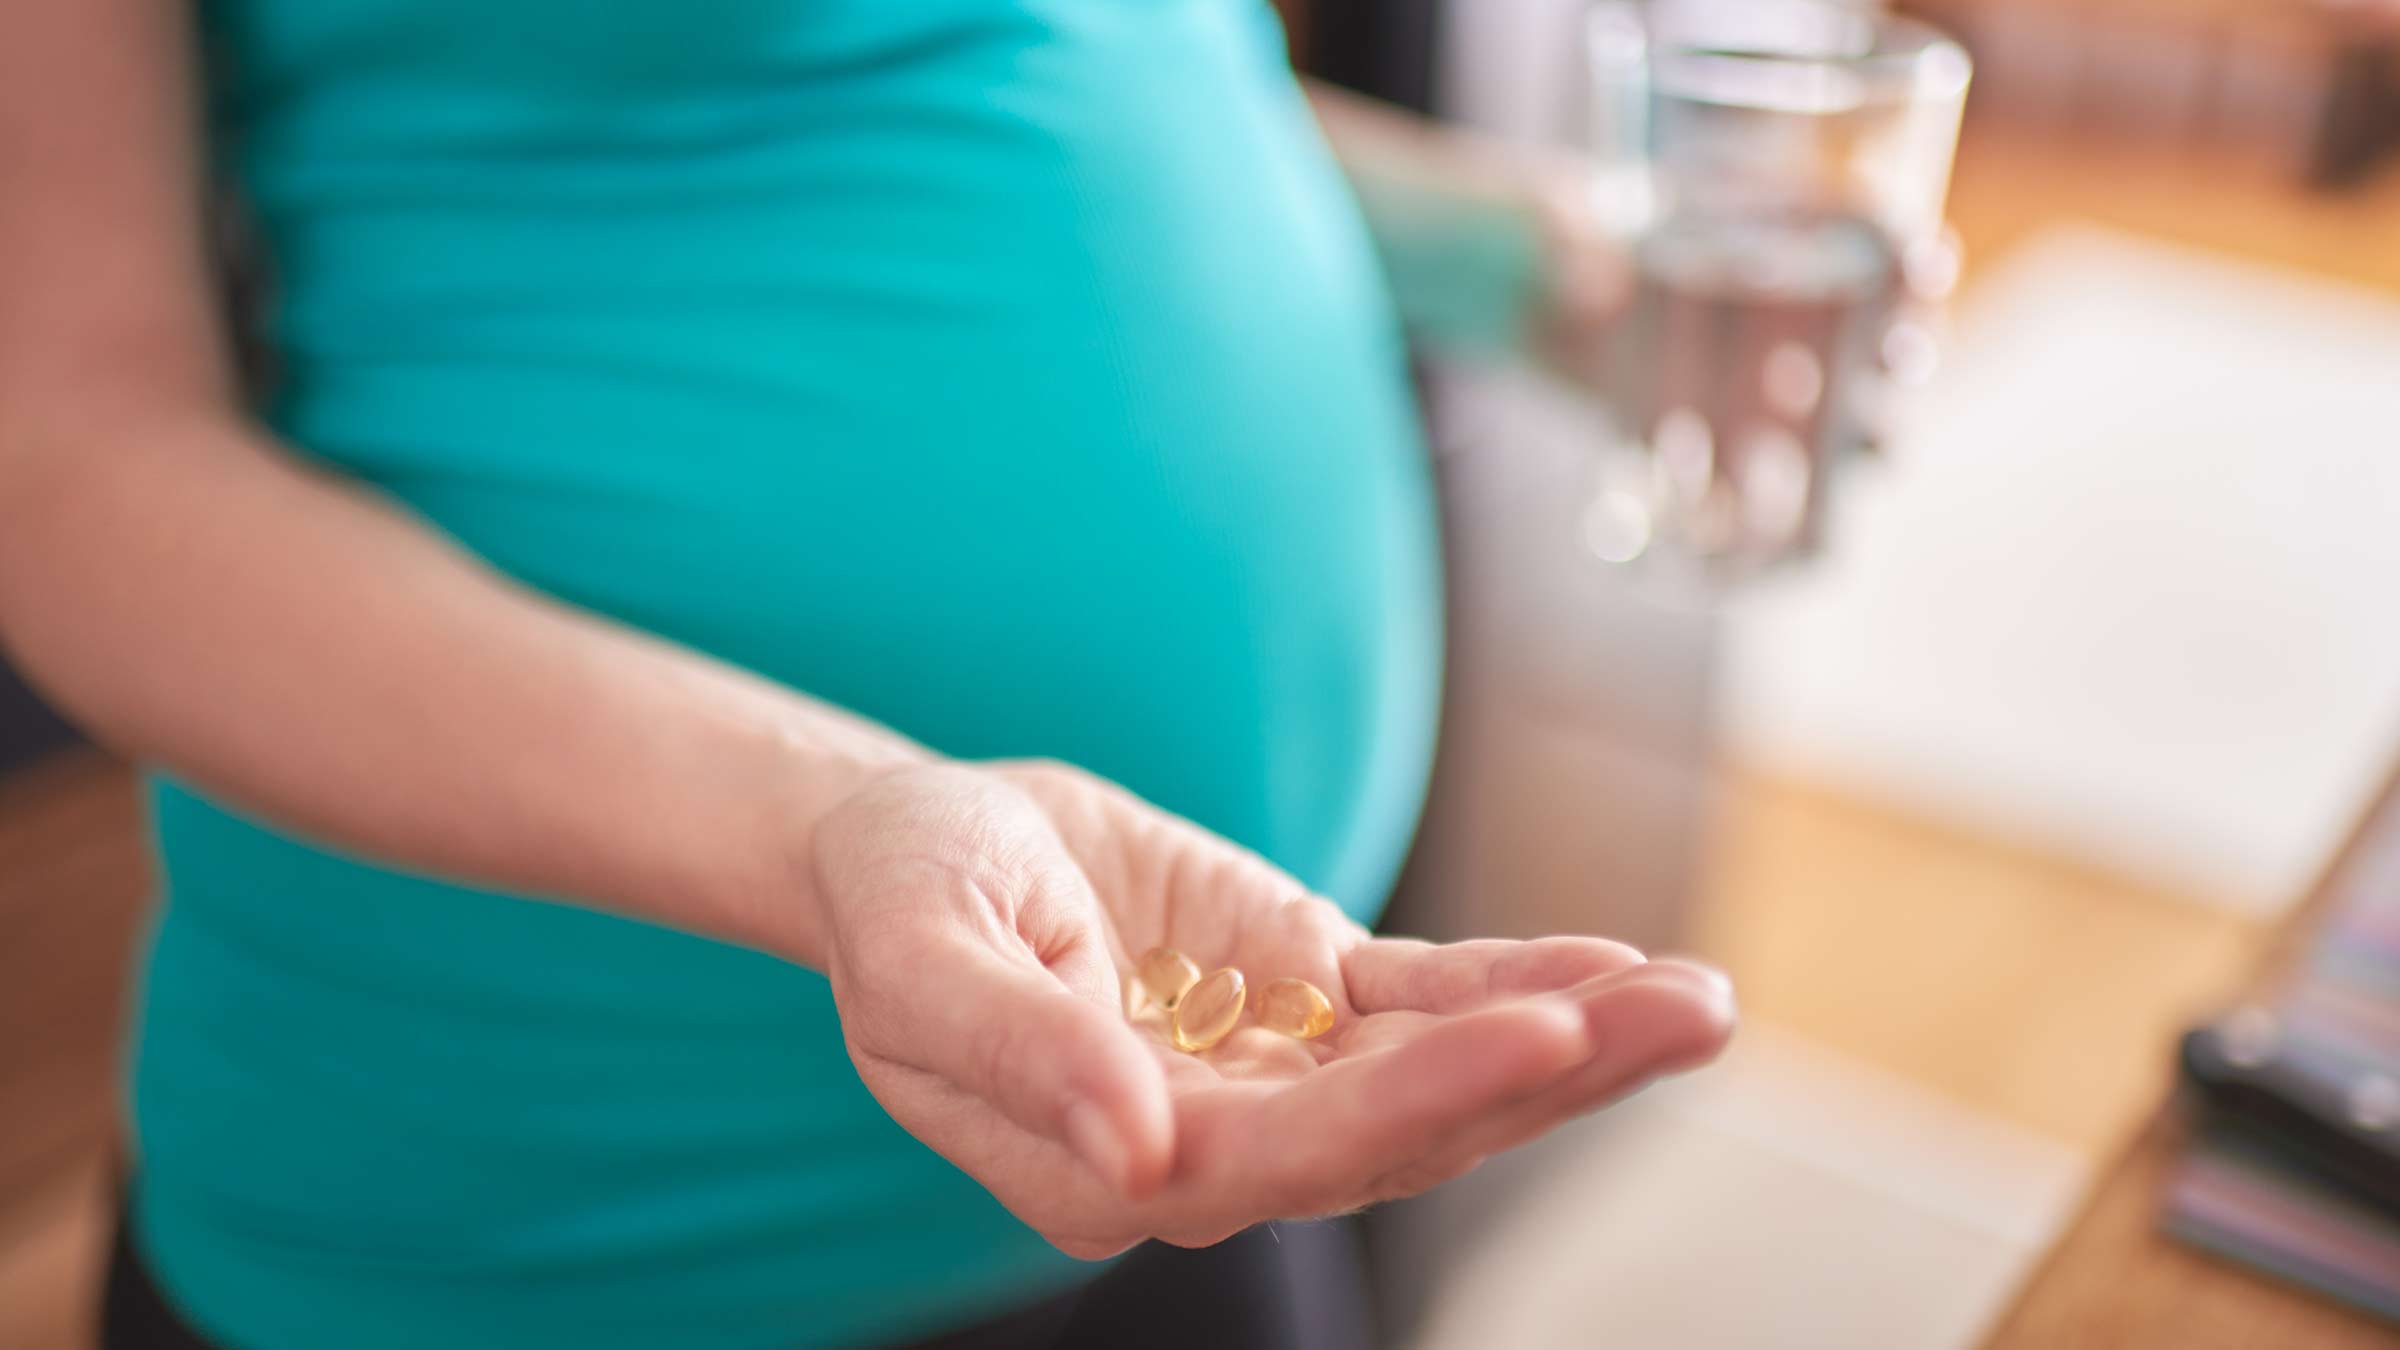 A pregnant woman holding prenatal vitamins